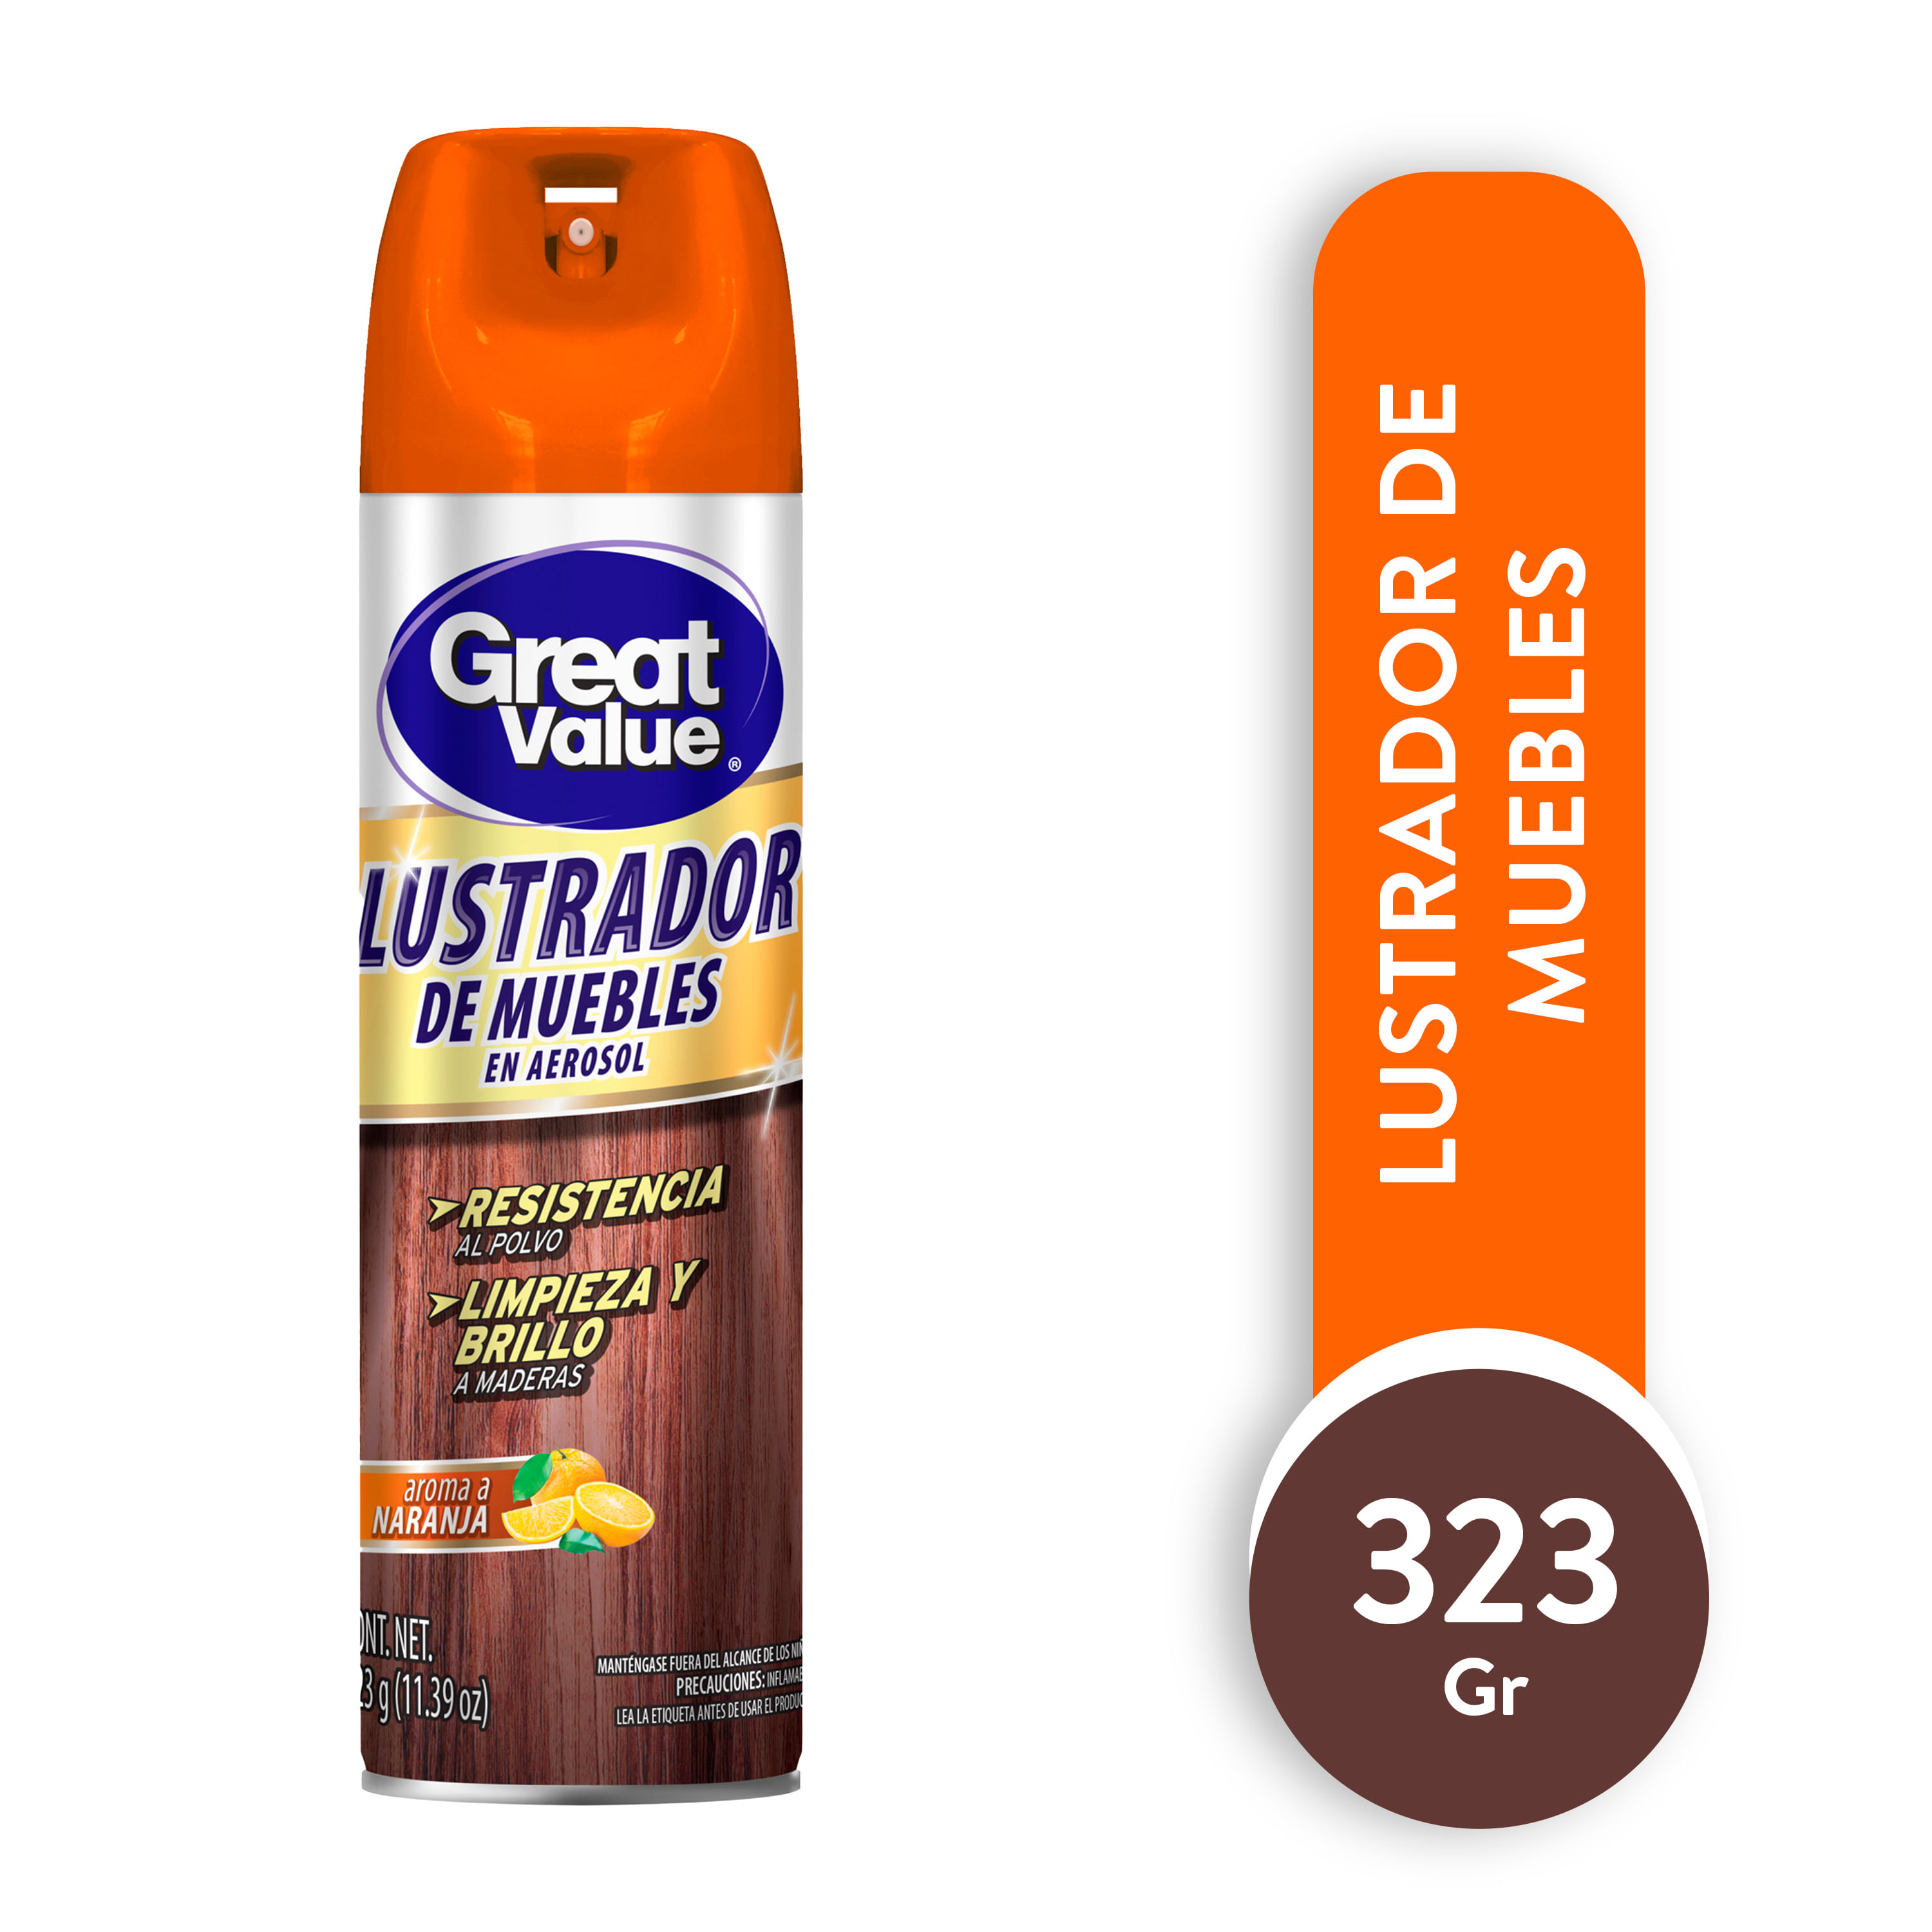 Desinfectante-en-aerosol-Great-Value-Crisp-Linen-323g-1-31334